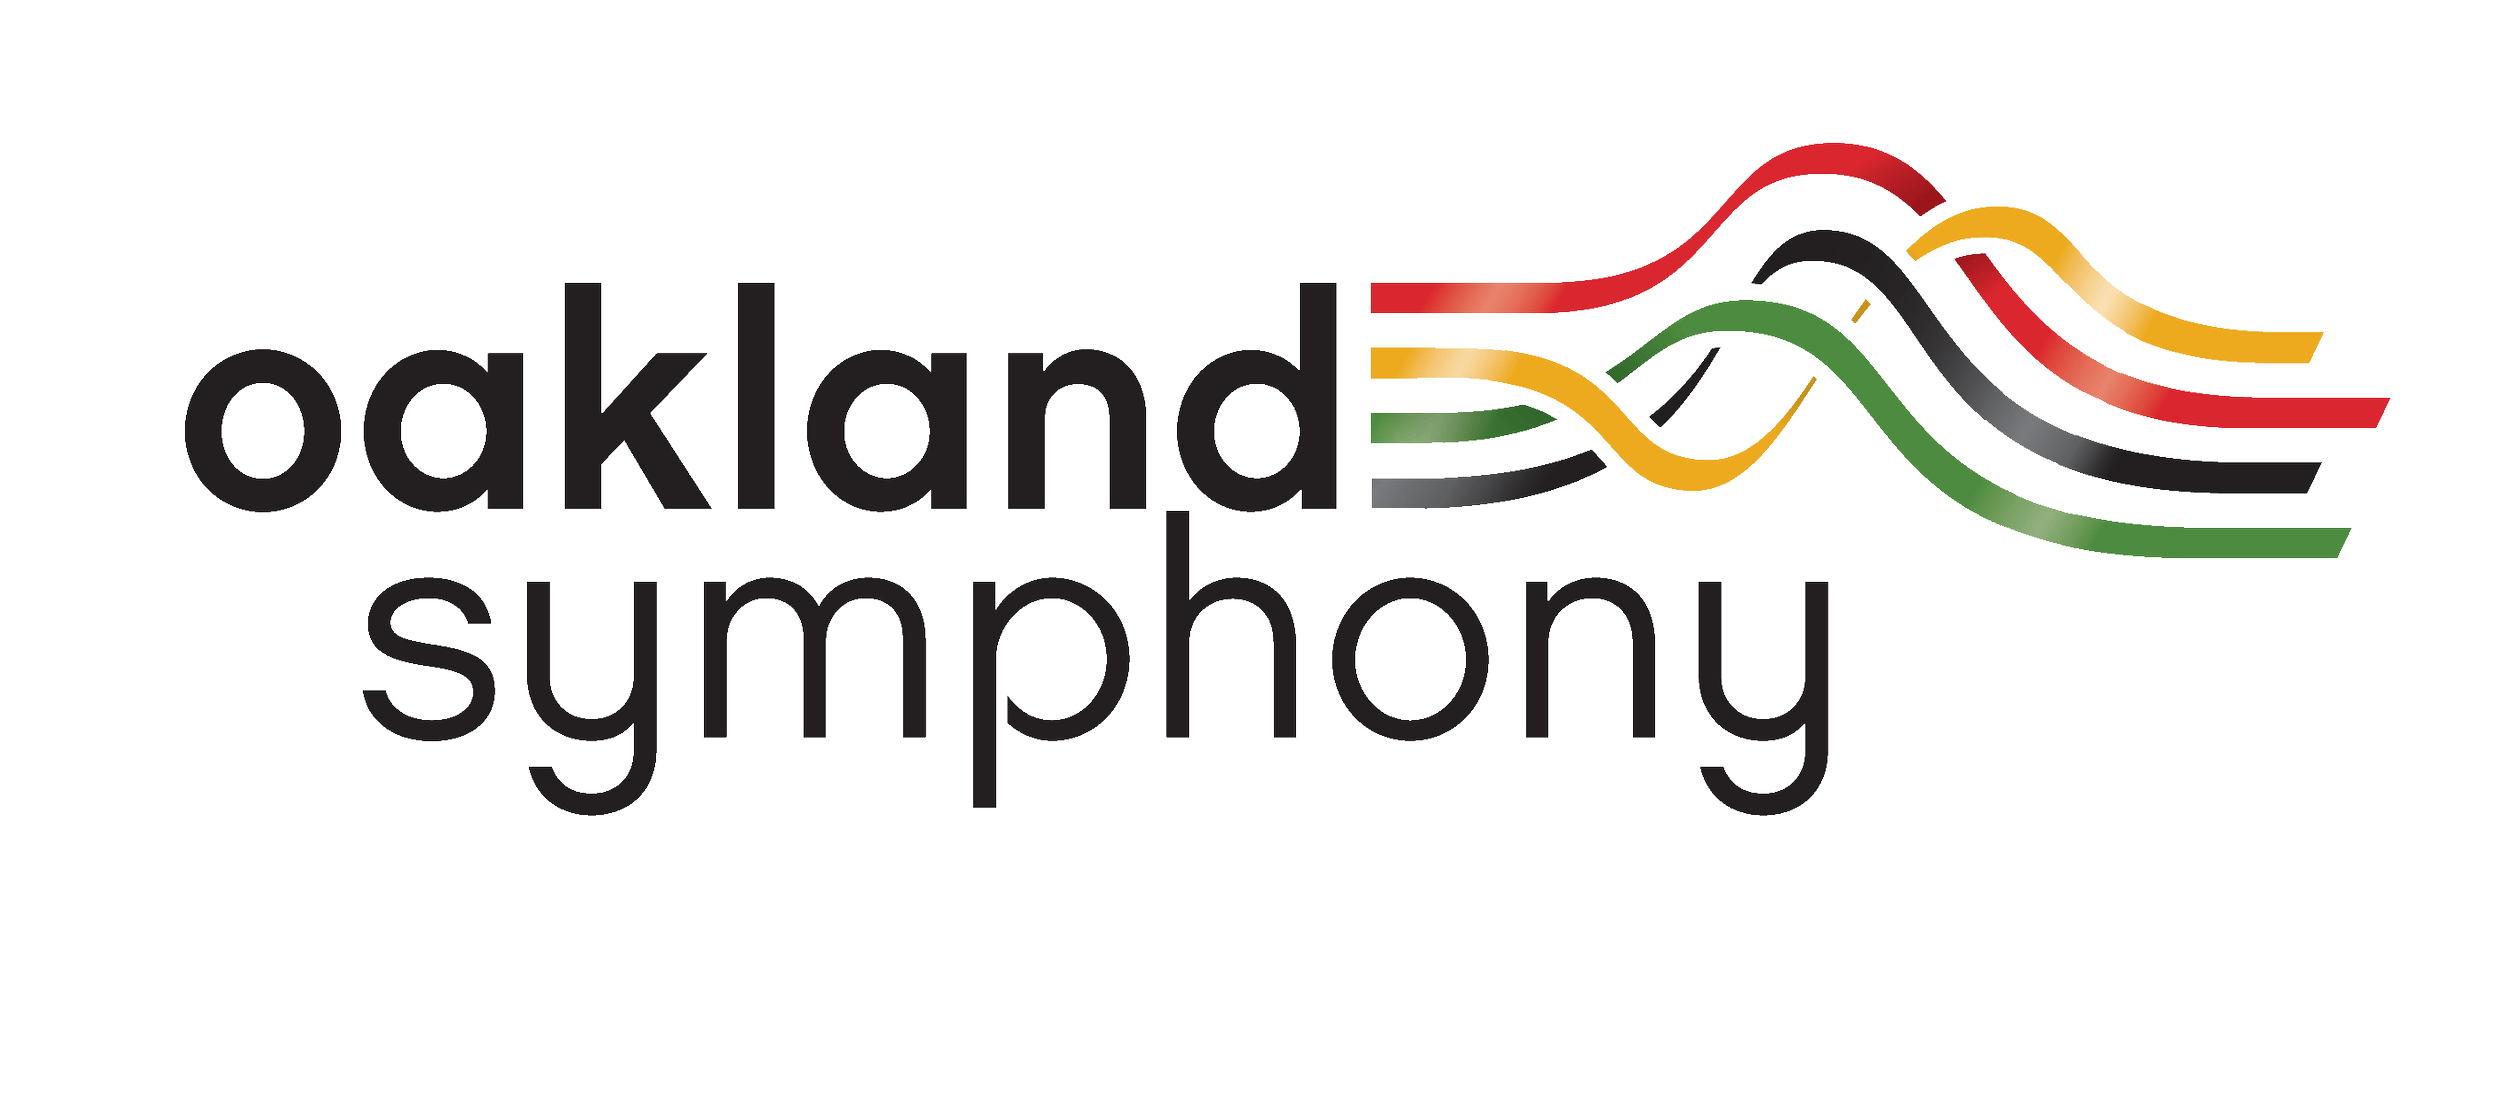 Oakland symphony logo.png